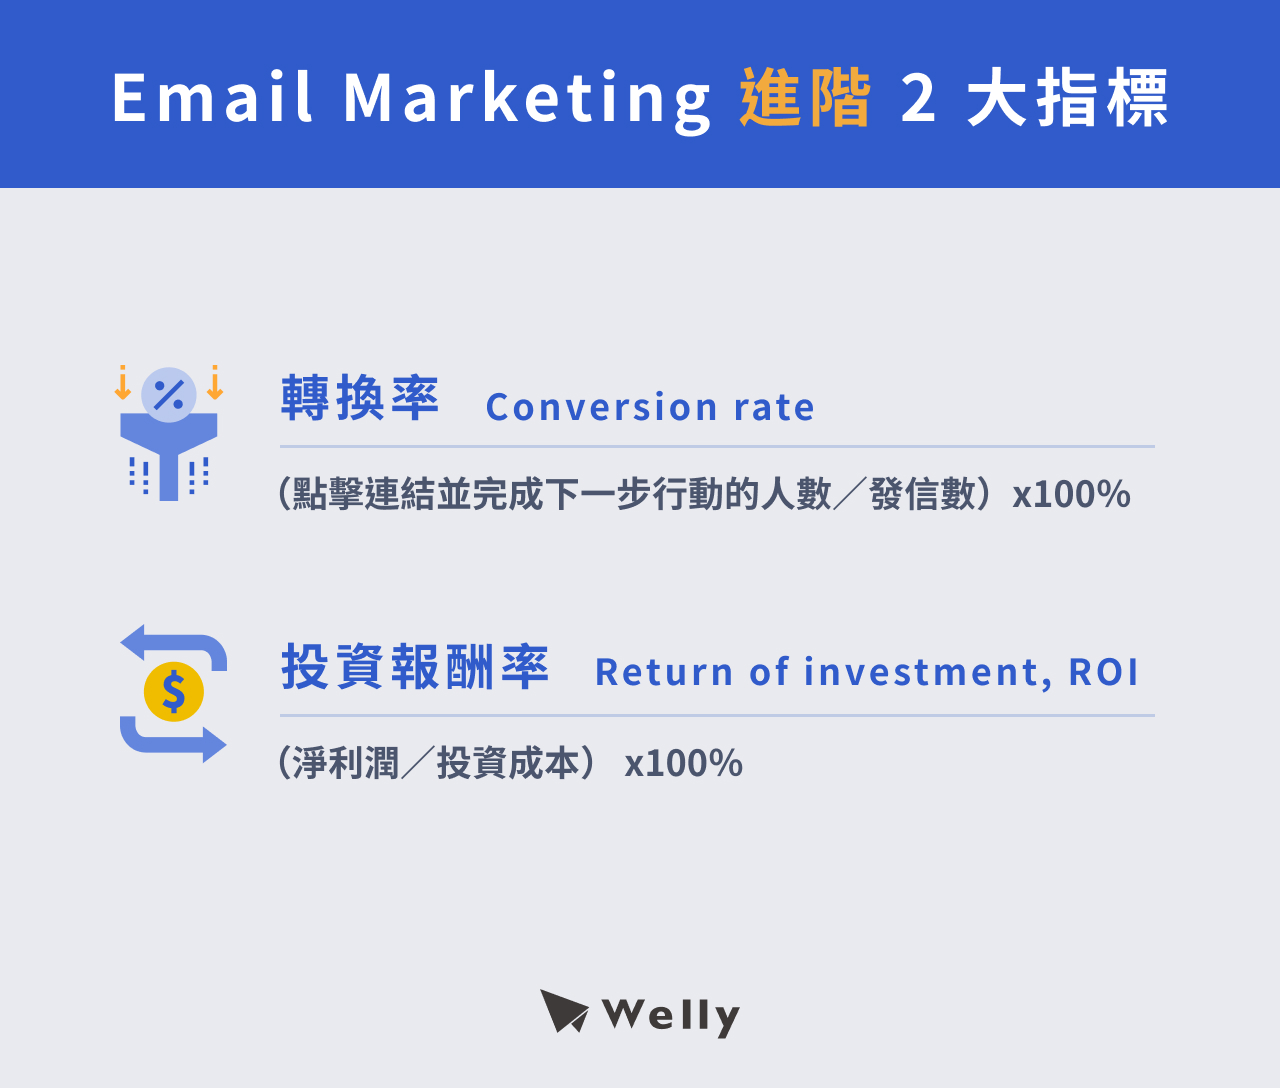 Email Marketing 進階 2 大指標